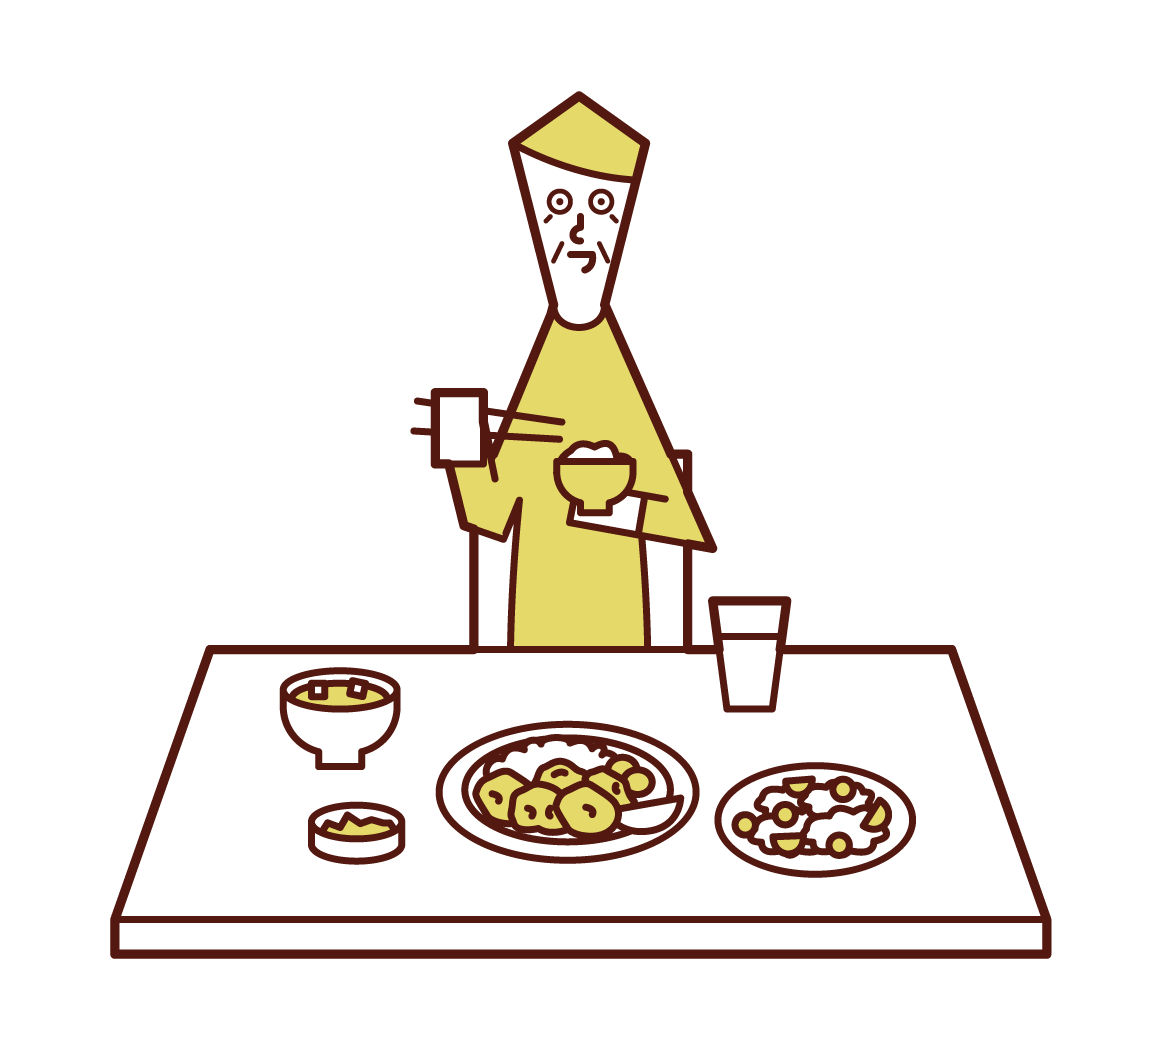 Illustration of an old man eating